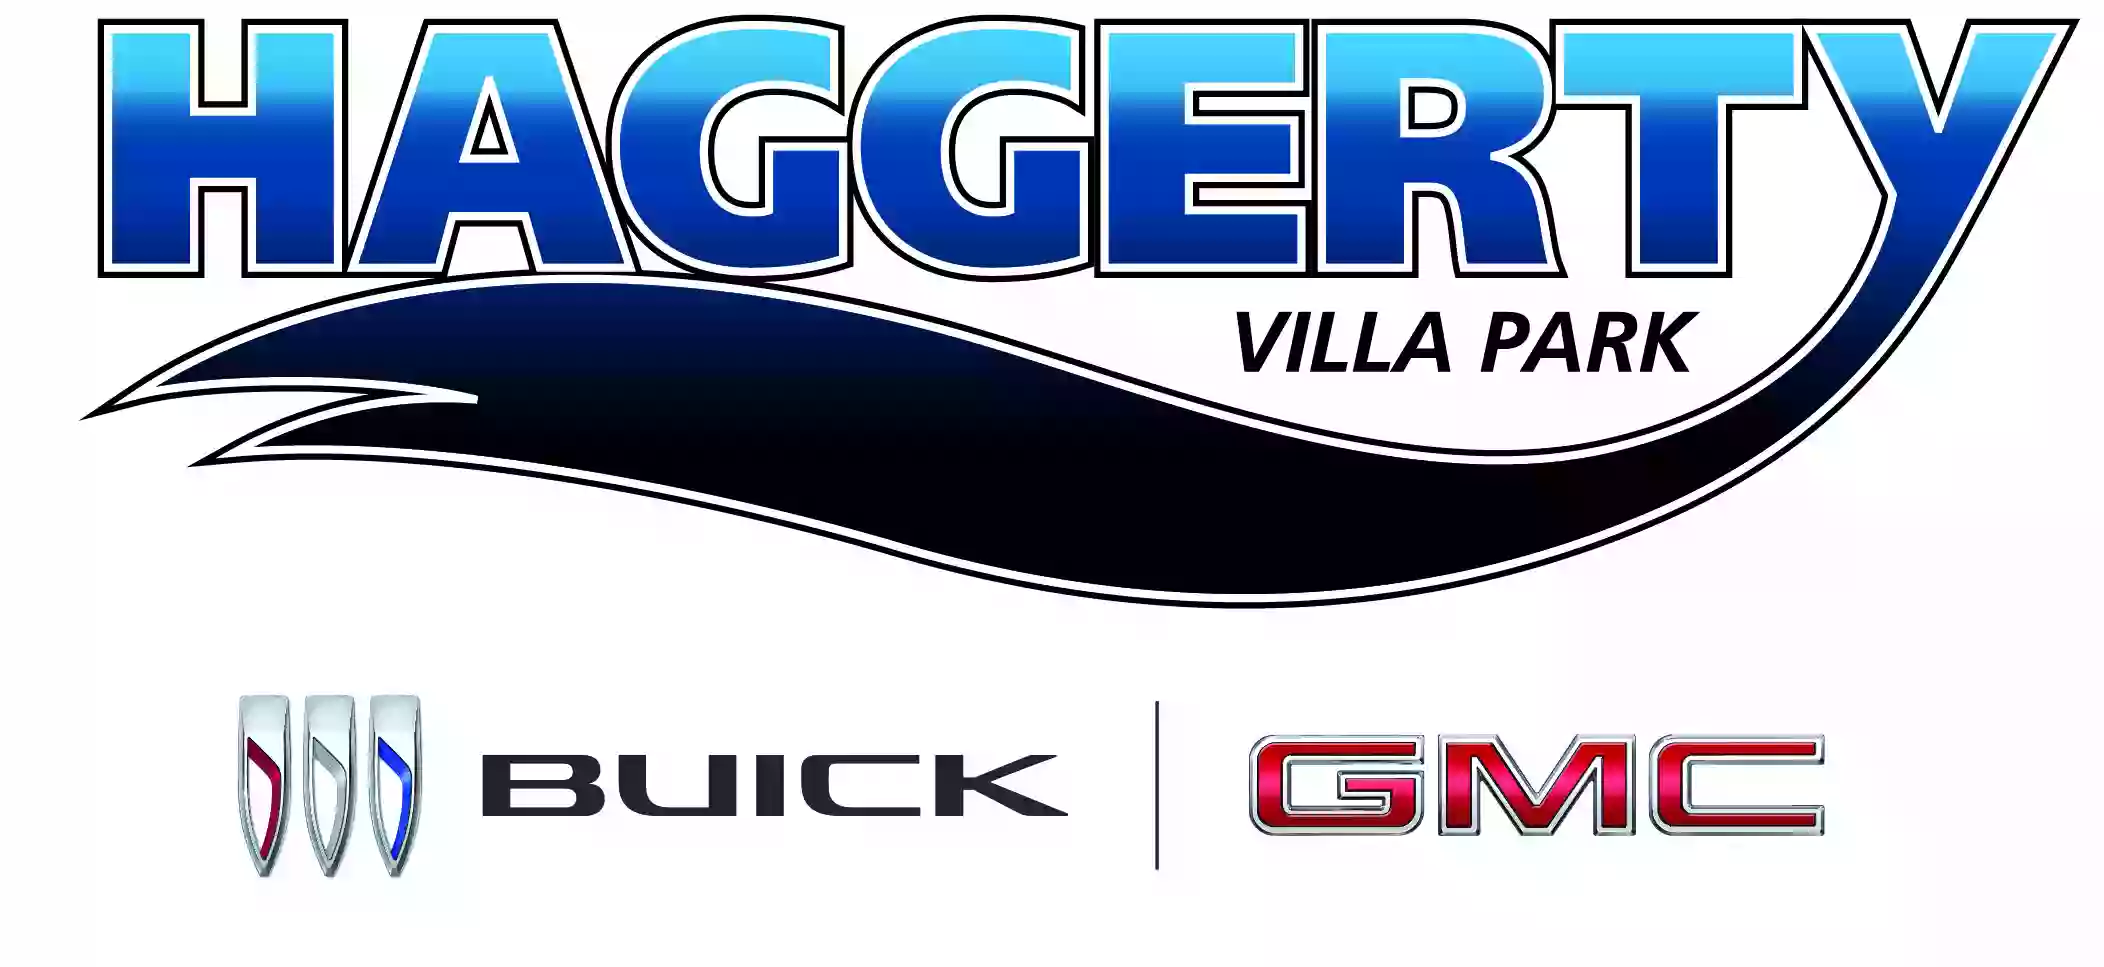 Parts Center - Haggerty Buick GMC